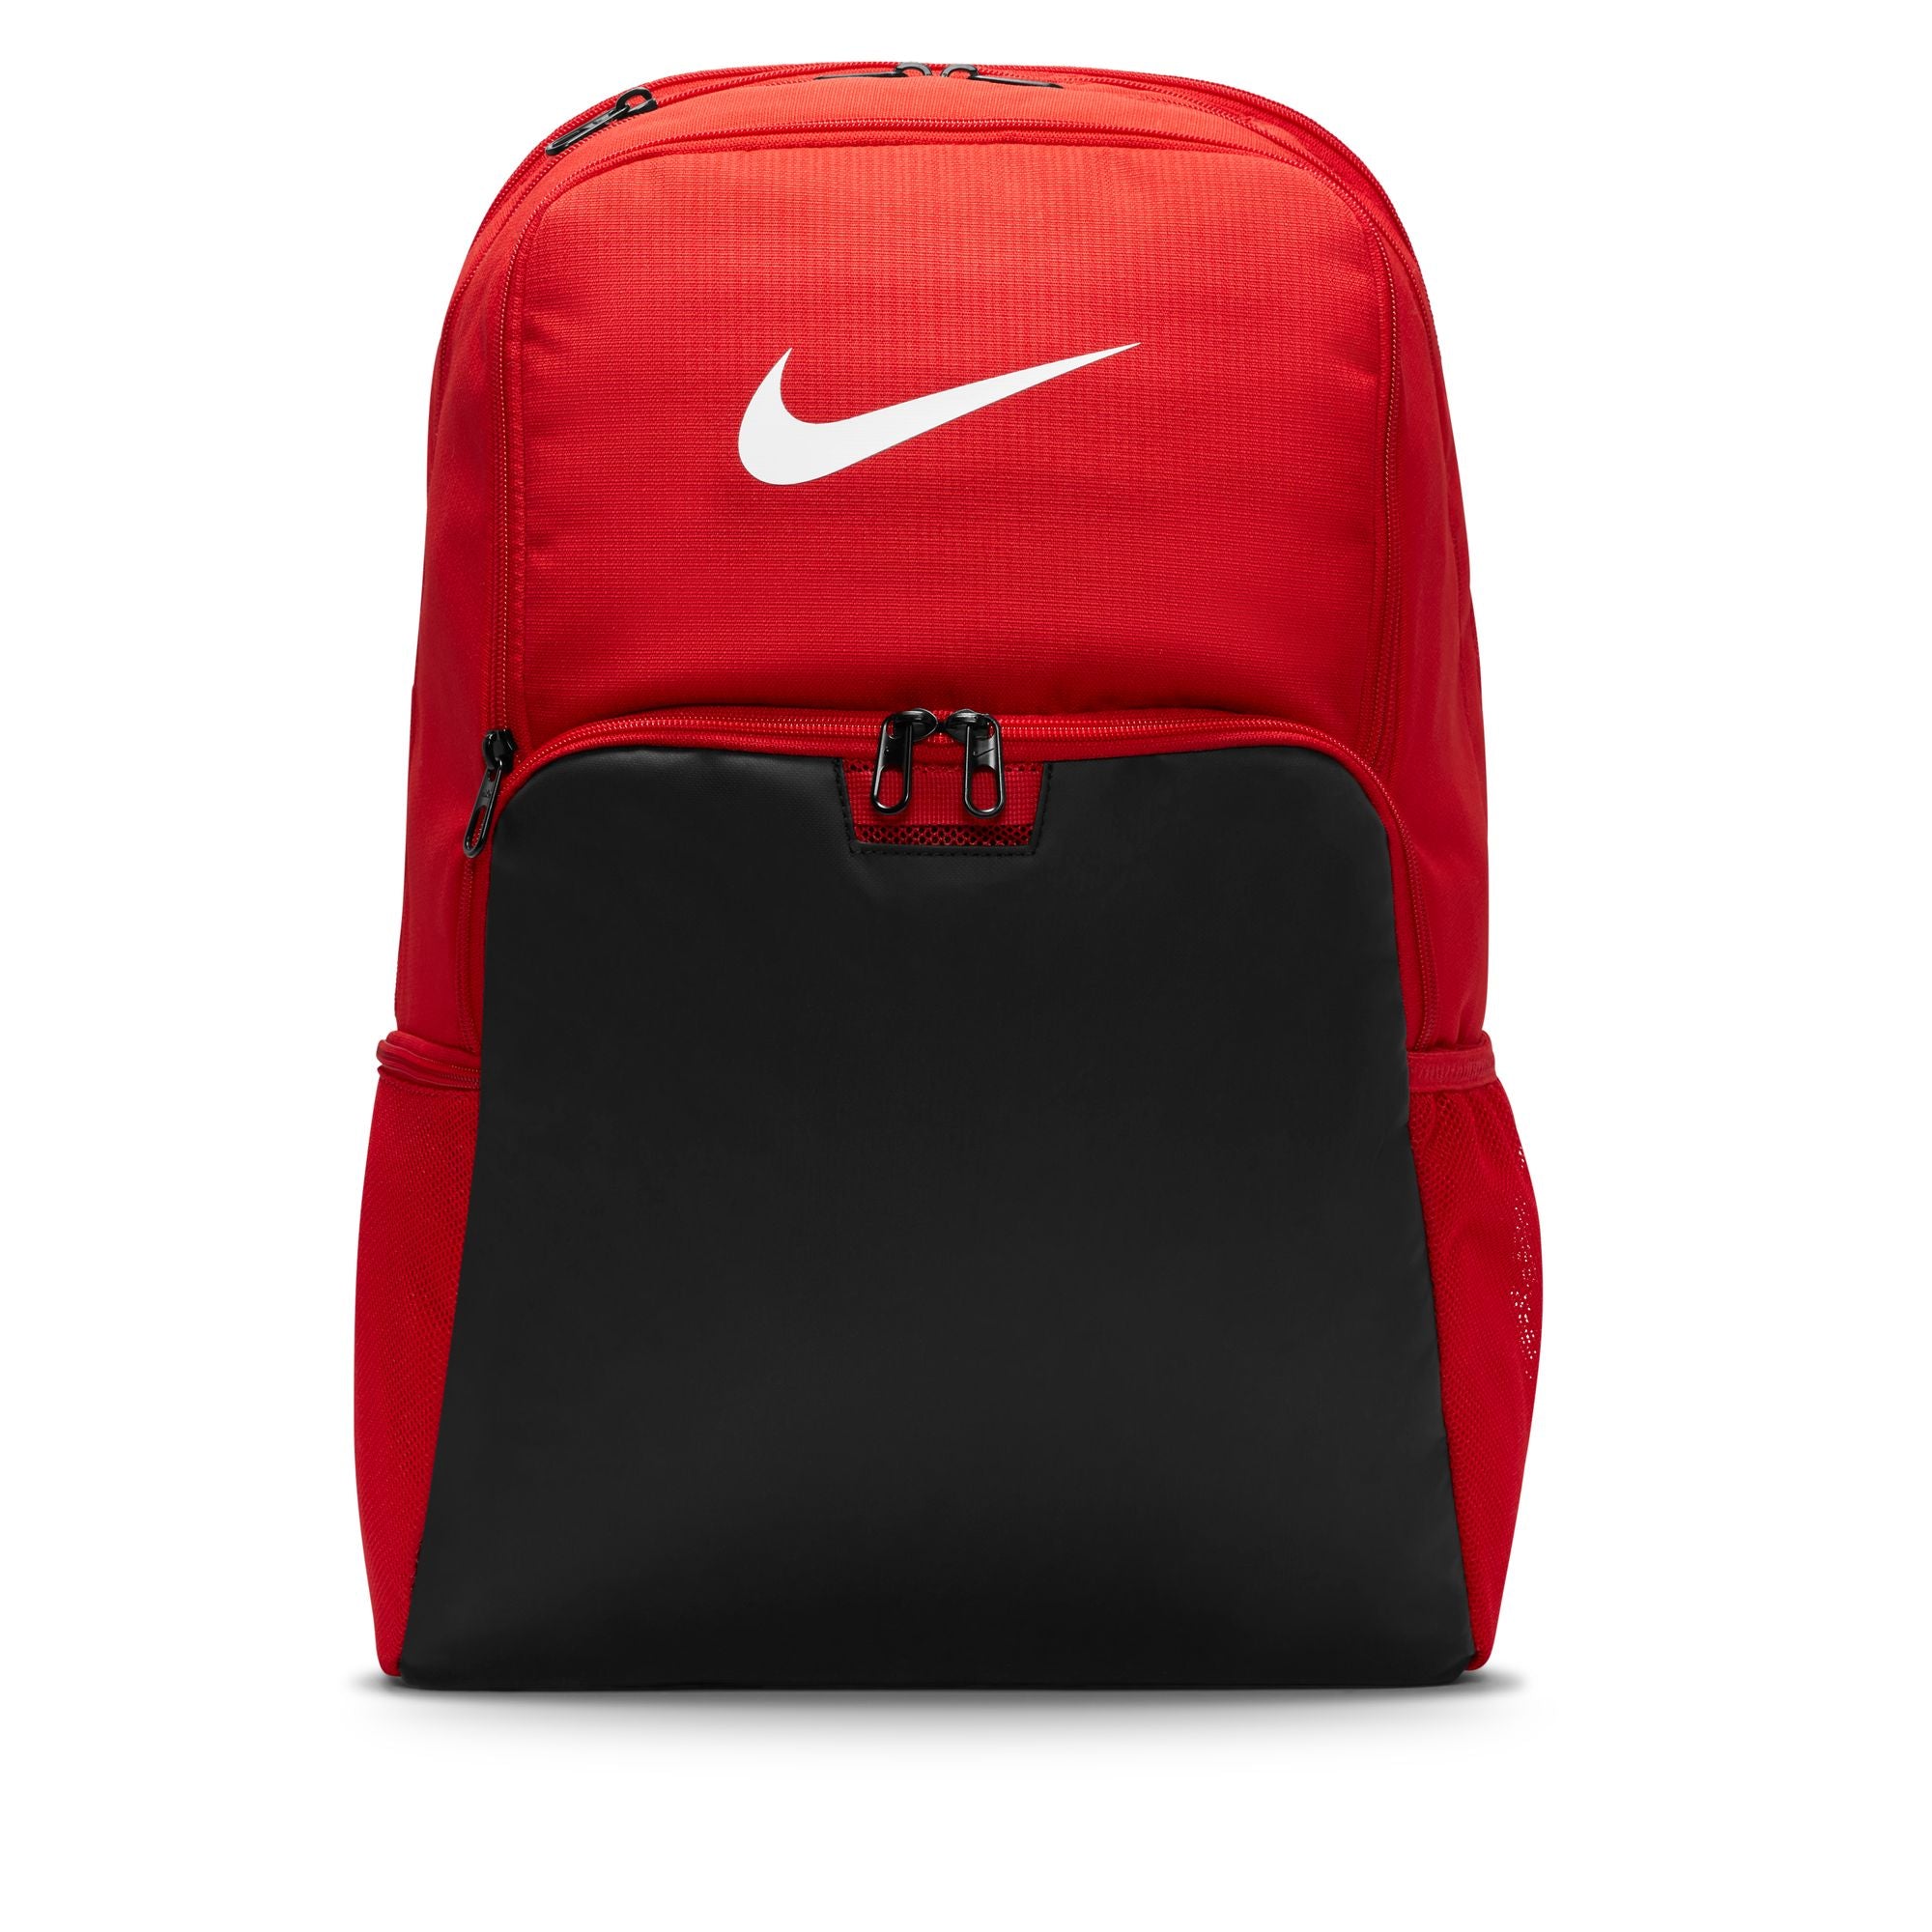 Buy Nike Brasilia 9.5 Backpack Green online